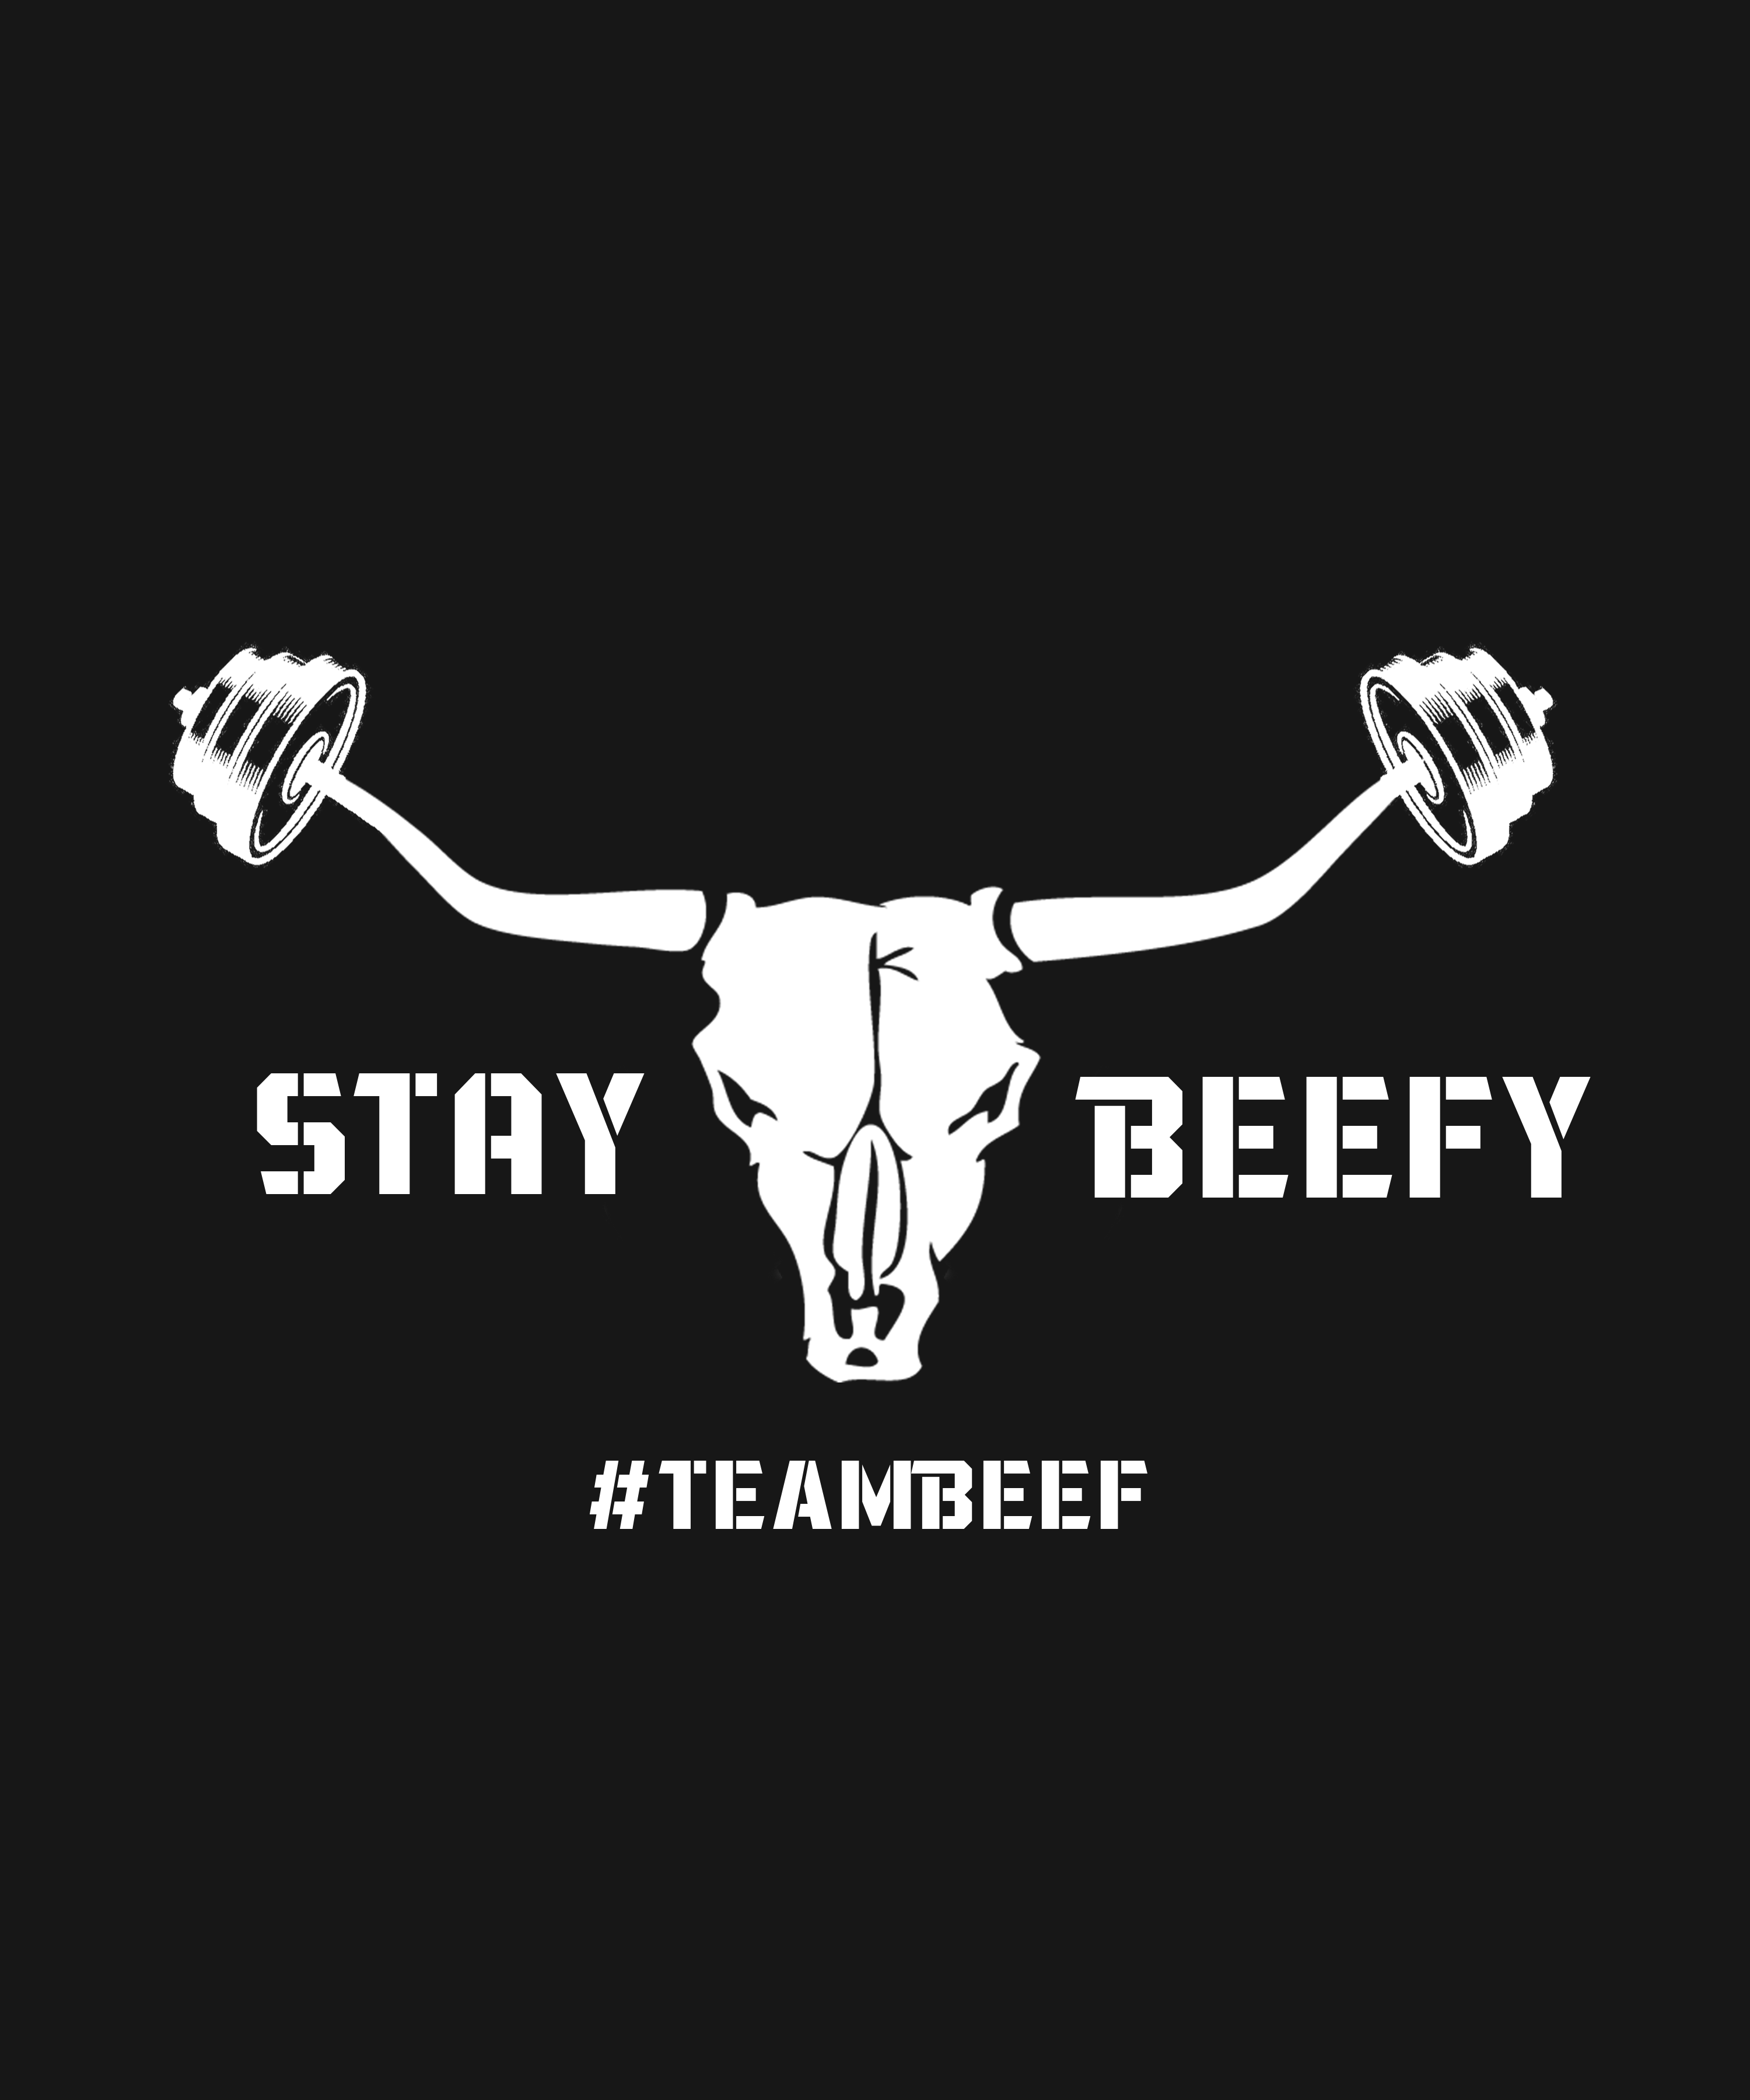 Stay Beefy logo